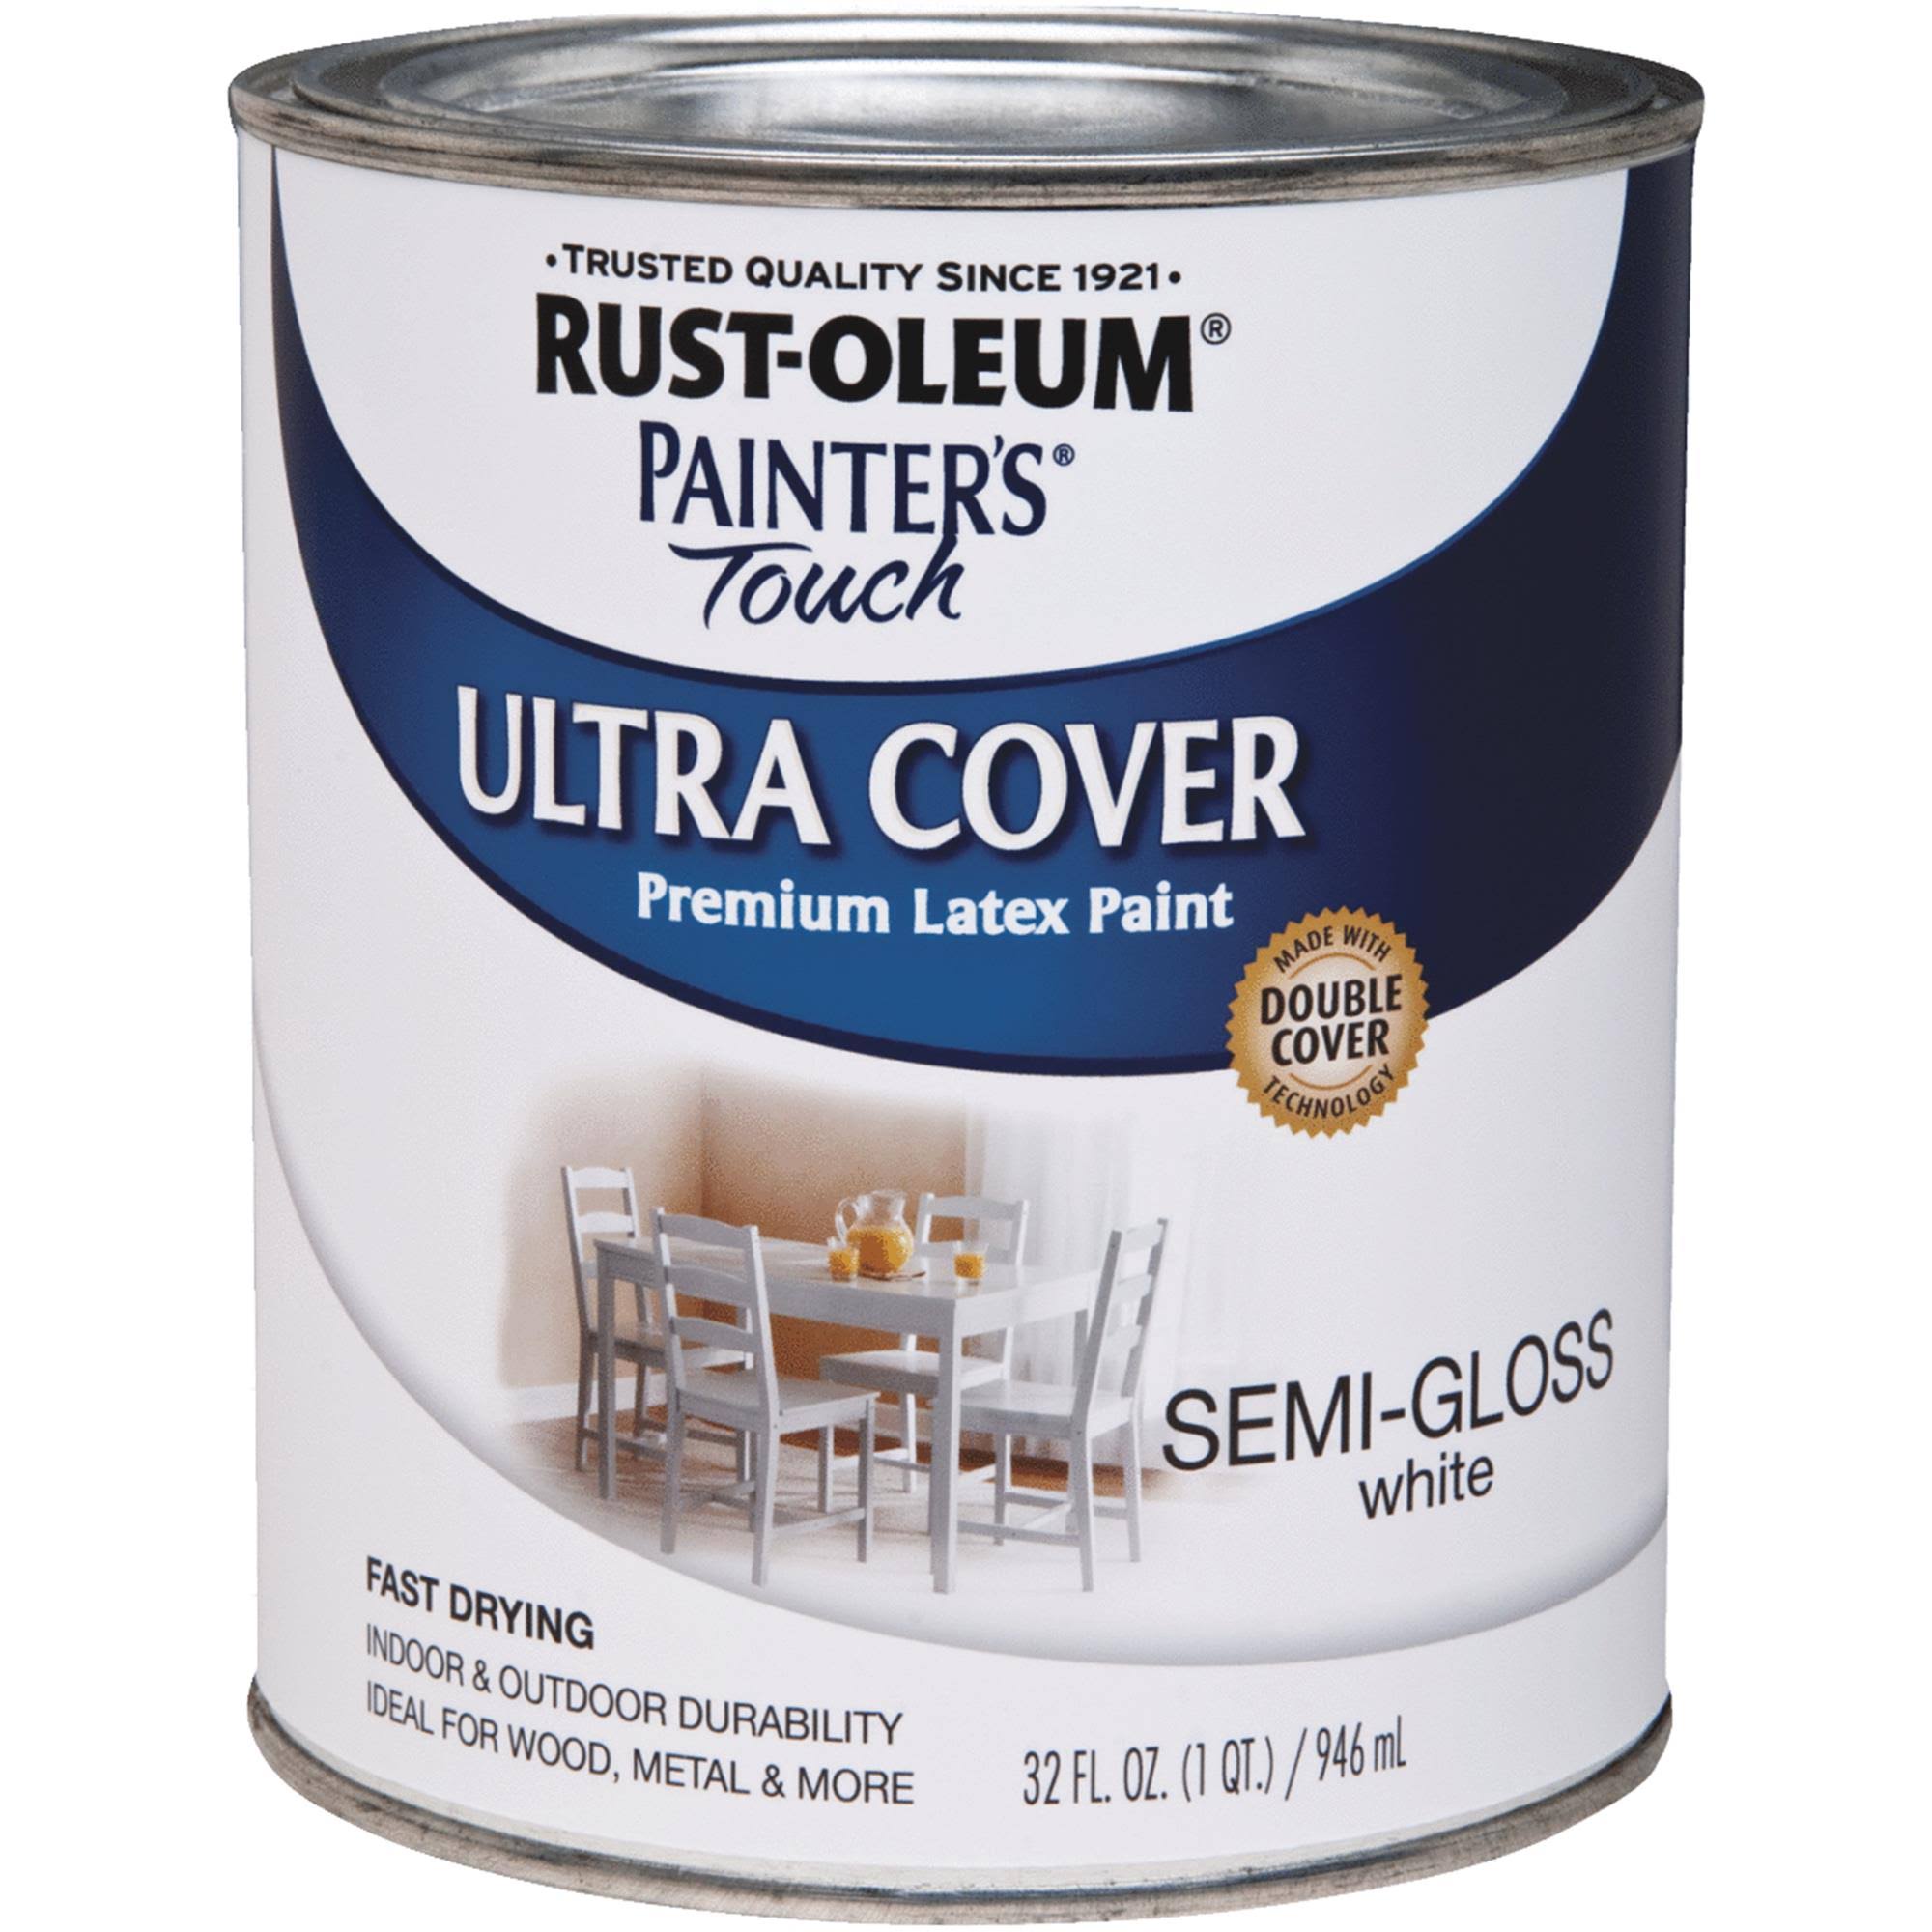 Rust-Oleum Painter's Touch 2X Ultra Cover Premium Latex Paint, White Semi-Gloss, 1 Qt. 1993502